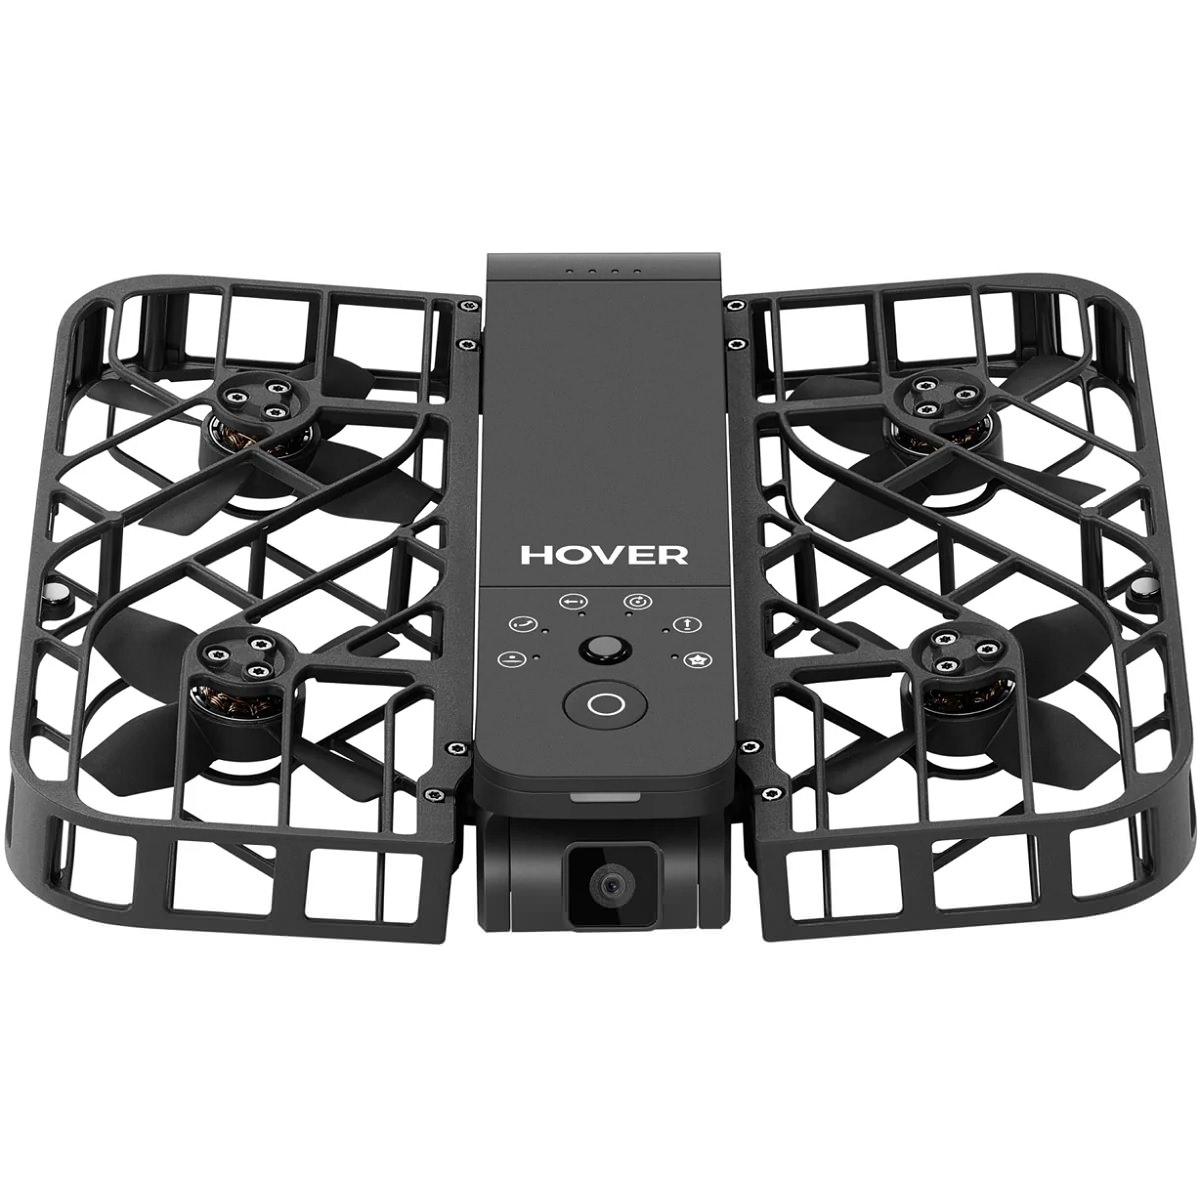 HOVERAir X1 Self-Flying Camera 